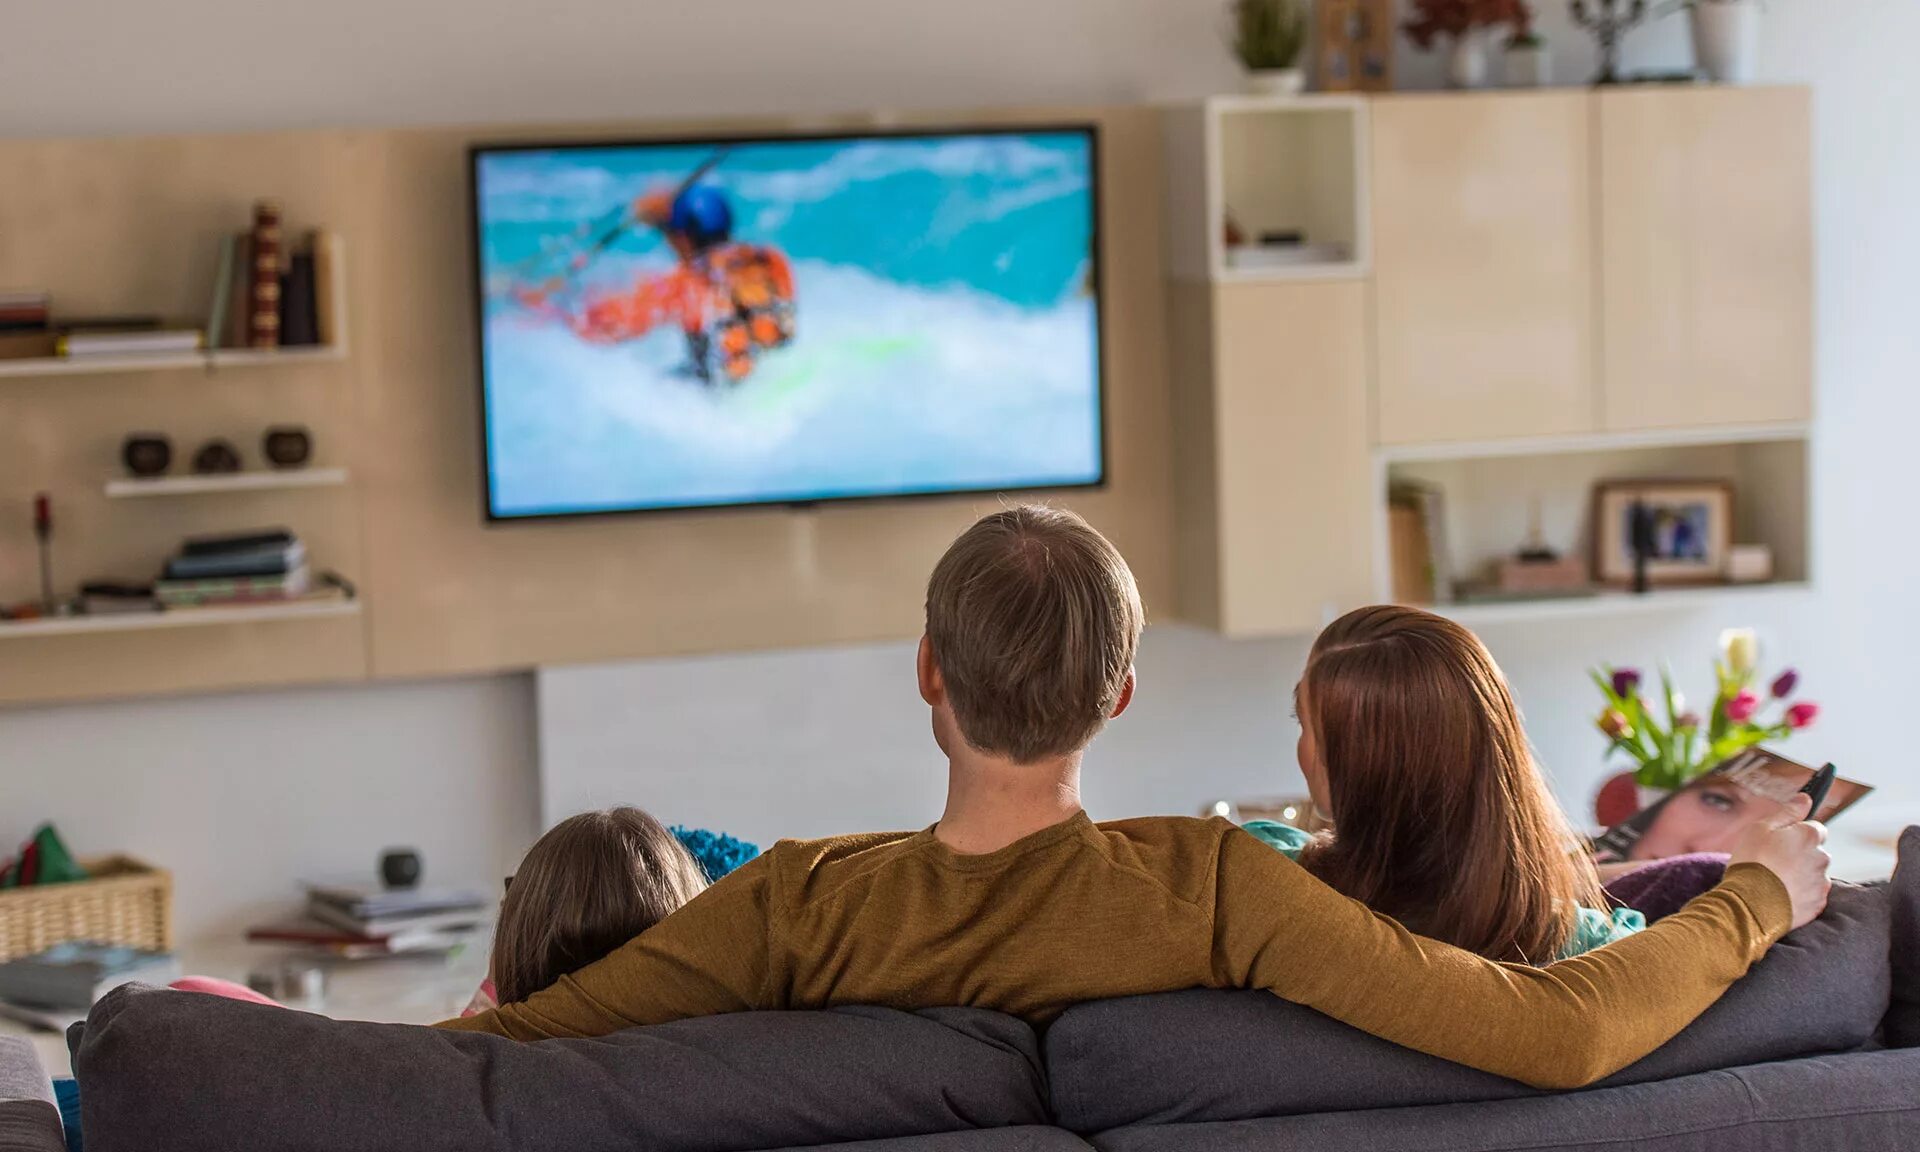 Видео просмотра телевизора. Человек сидит перед телевизором. Семья у телевизора. Телевизор. Мы смотрим сейчас телевизор.